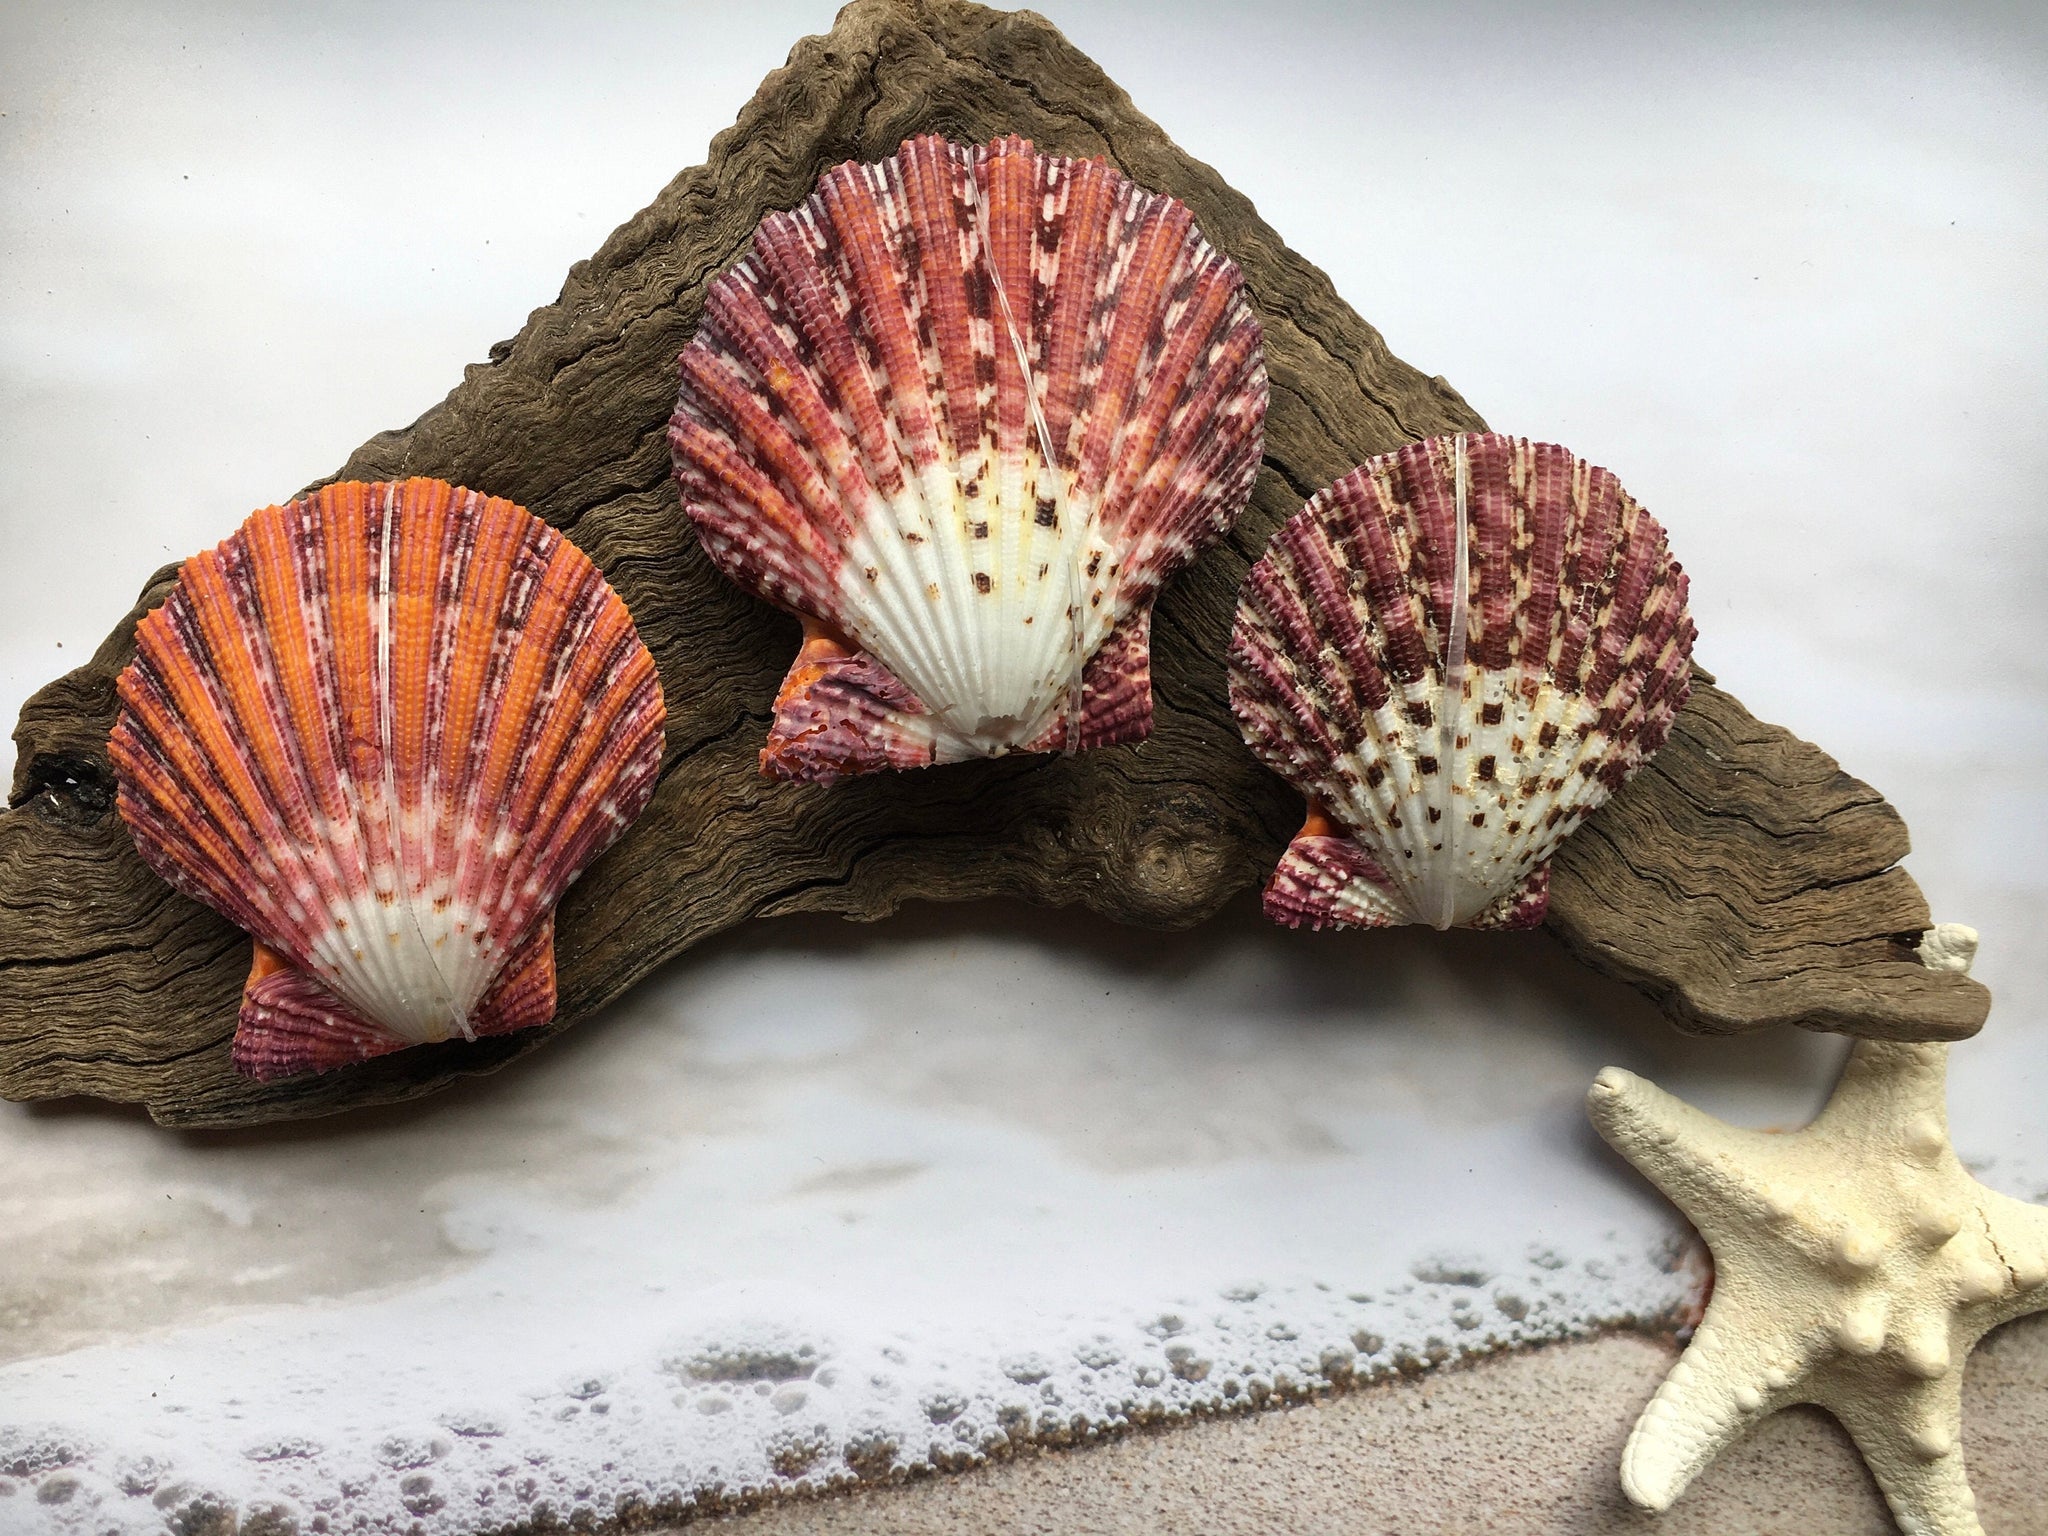 Small Scallop Shells-shell Bulk-seashell Supplies-scallop Shells for Crafts-flat  Scallop Shells-pectin Shells-wedding Decor-flat Scallops 